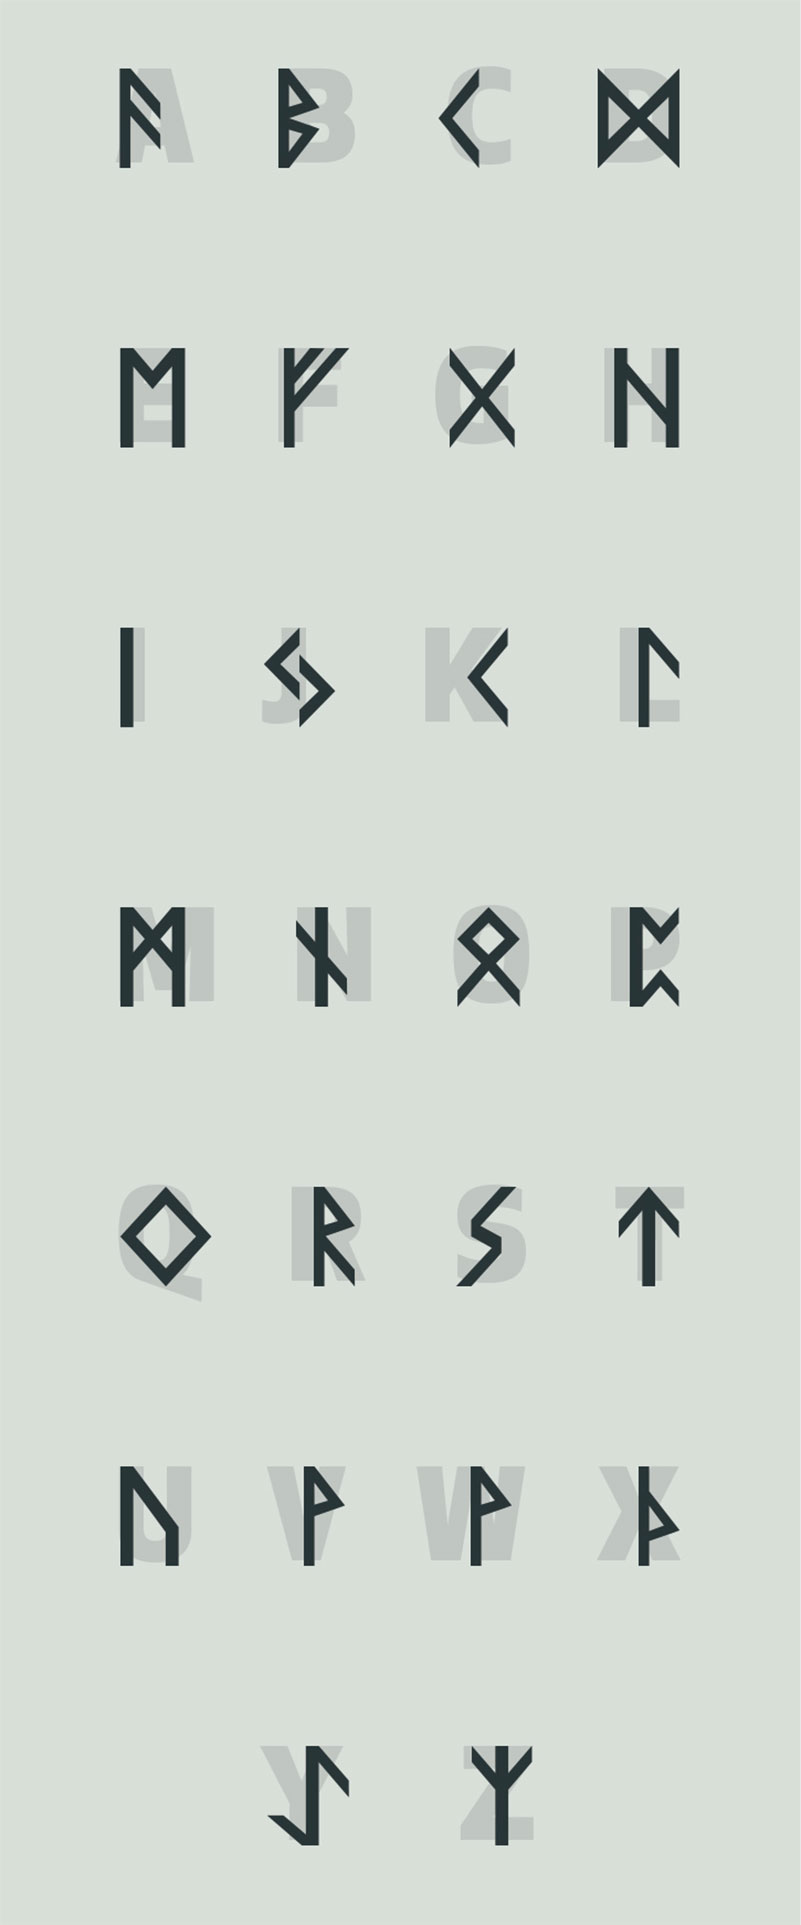 Floki - 100-greatest-free-fonts-of-2014-052a